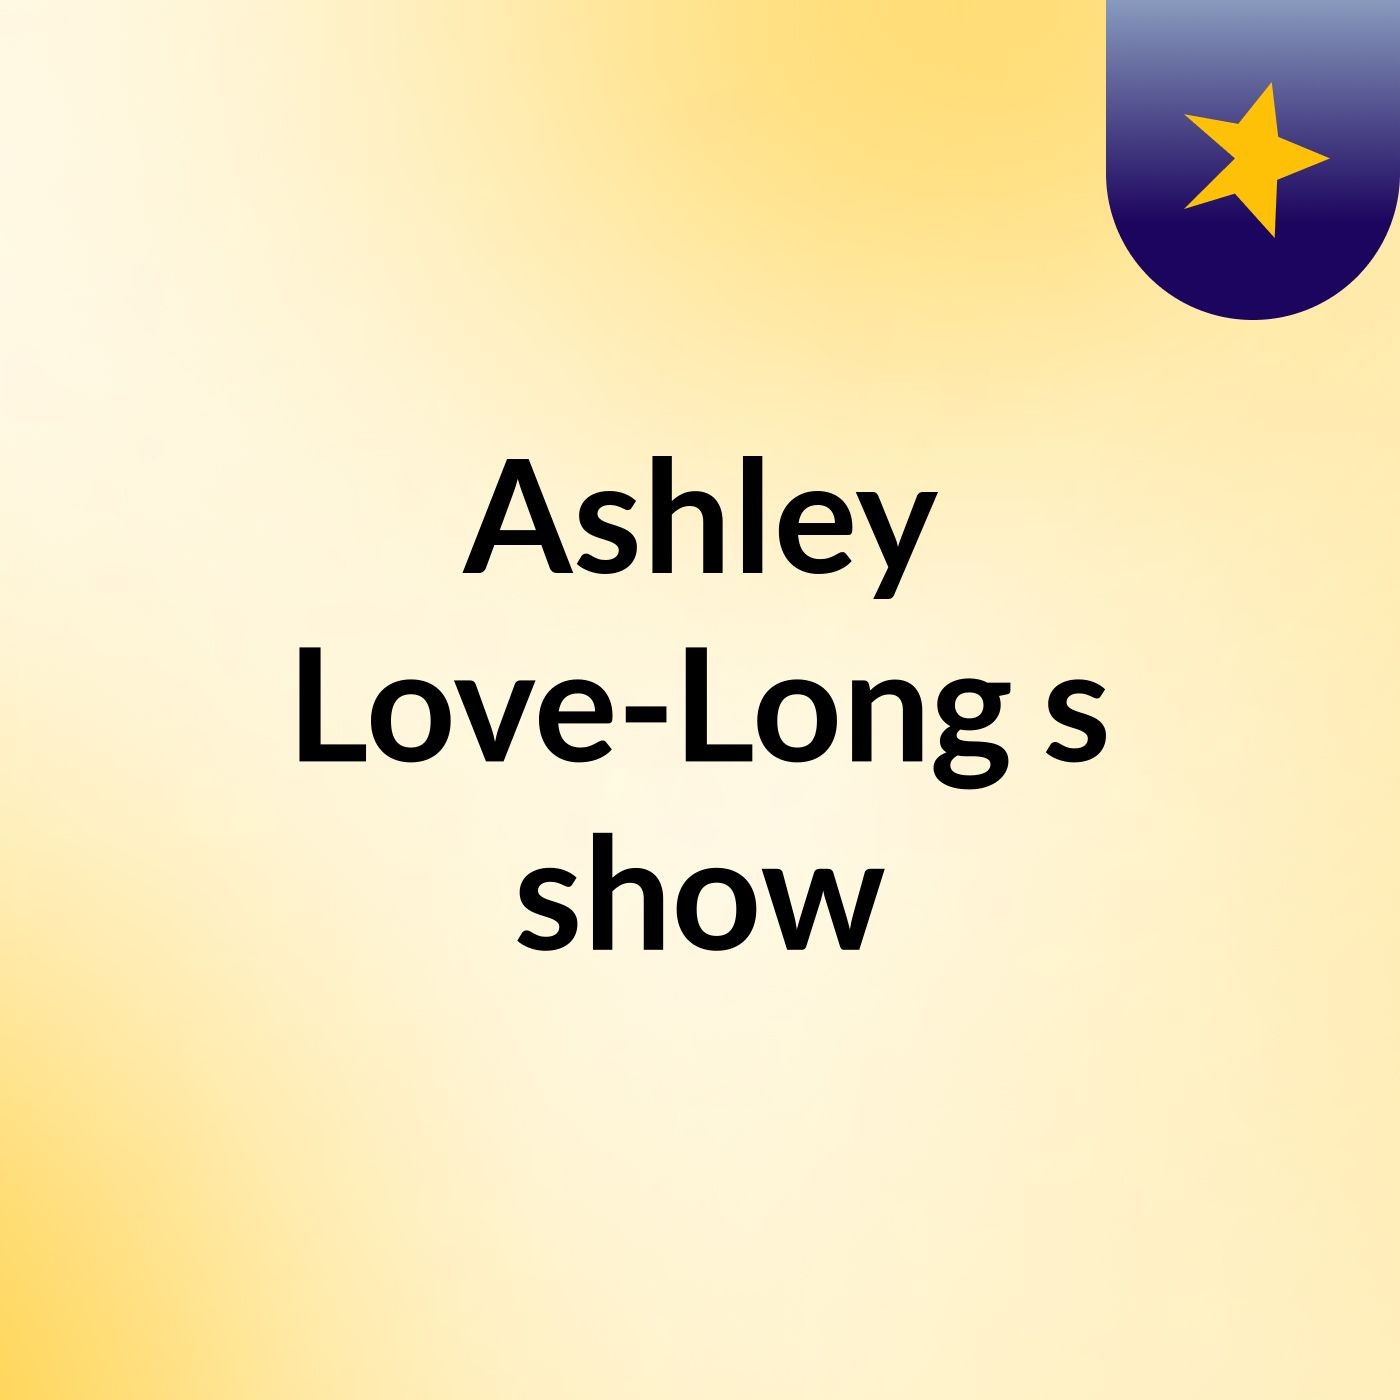 Episode 3 - Ashley Love-Long's show